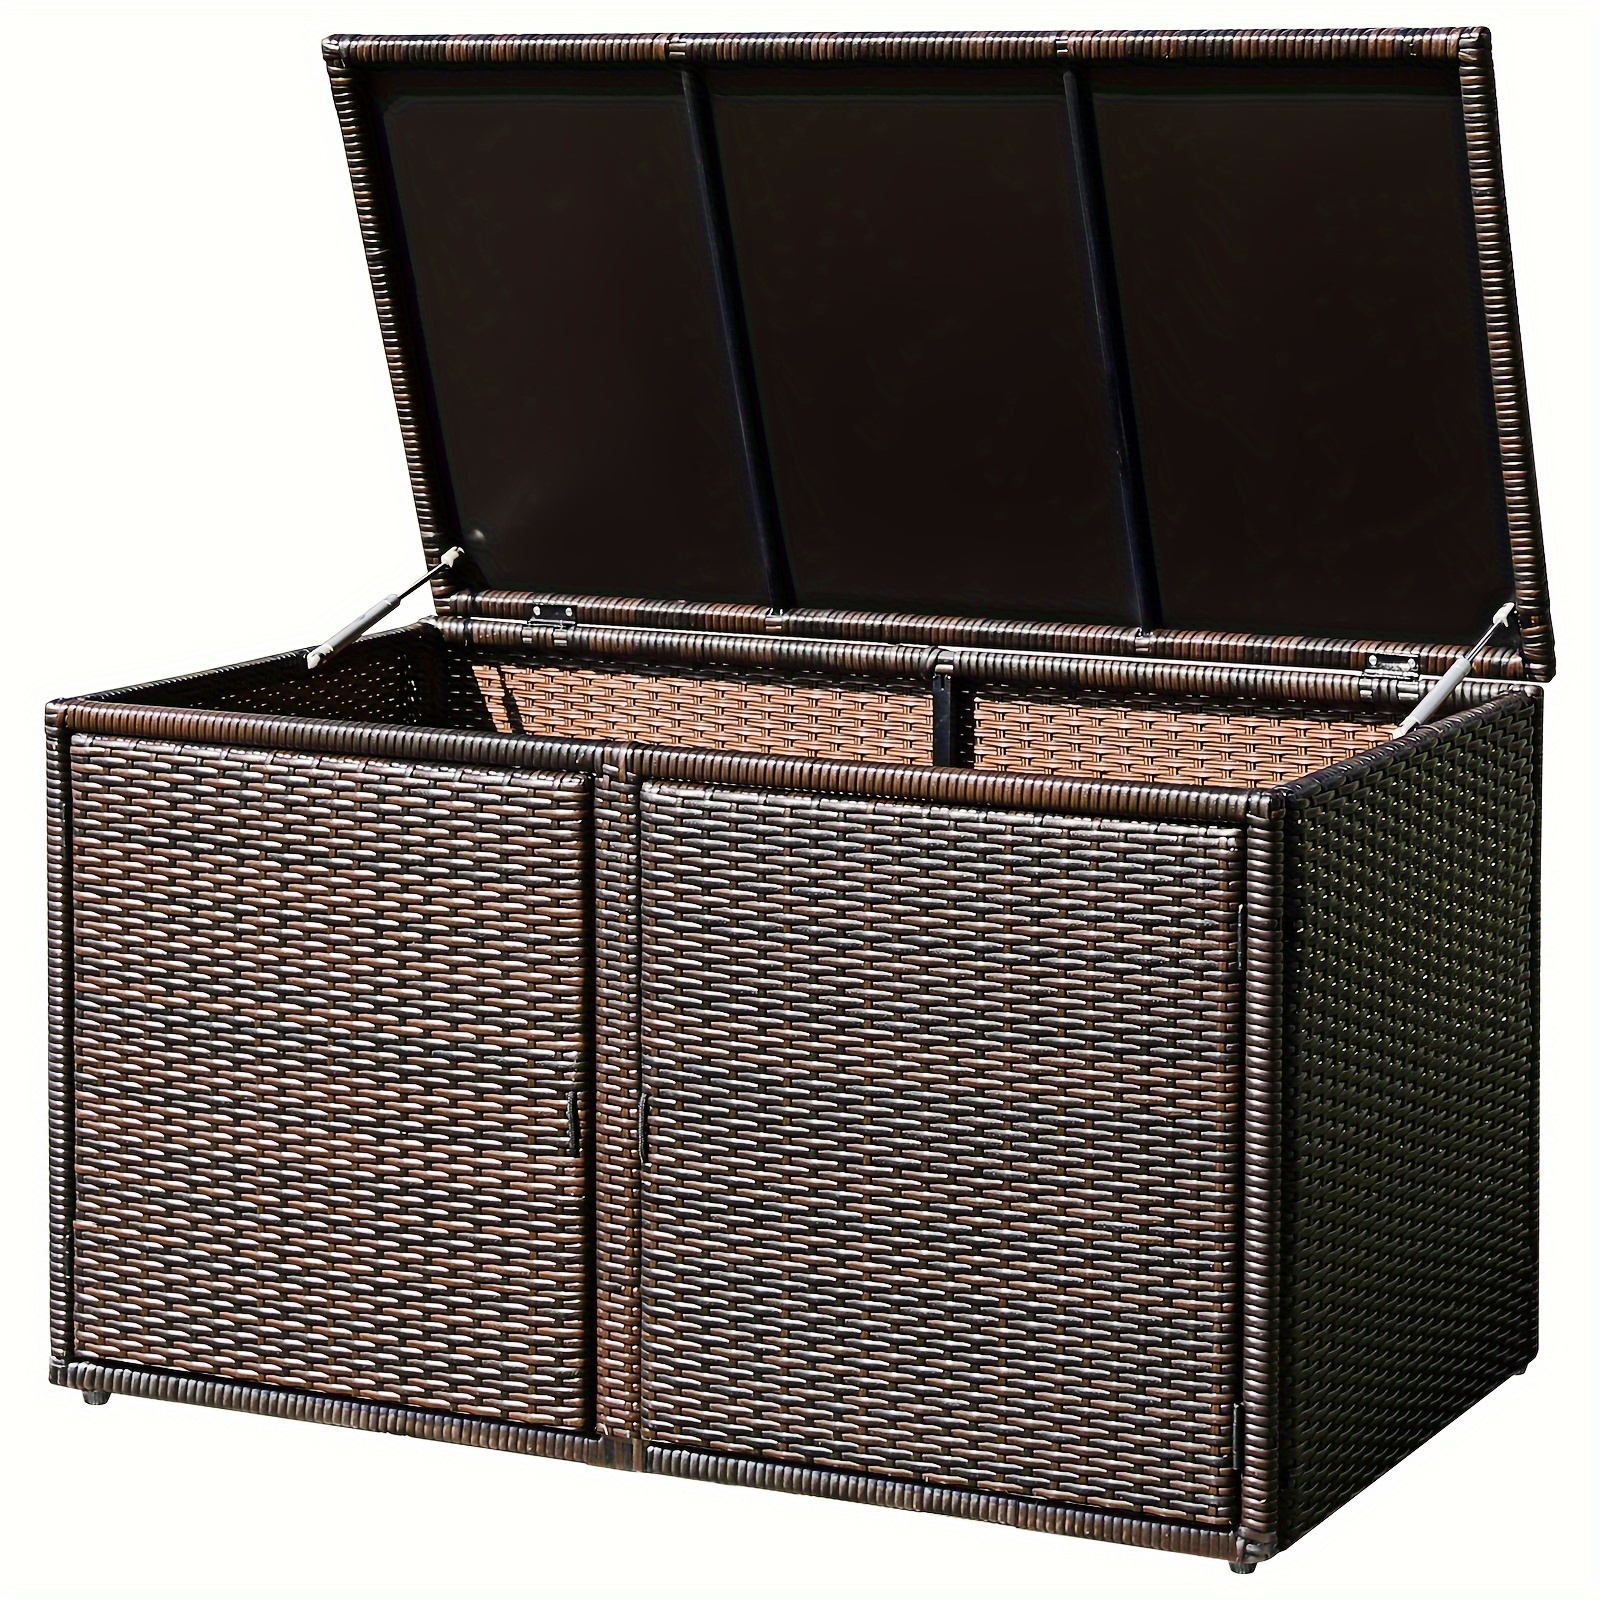 

1pc Extra Large 88 Gallon Rattan Storage Box - 85" Mix Brown Outdoor Patio Garden Container With Shelf, Durable Wicker Deck Bin Organizer